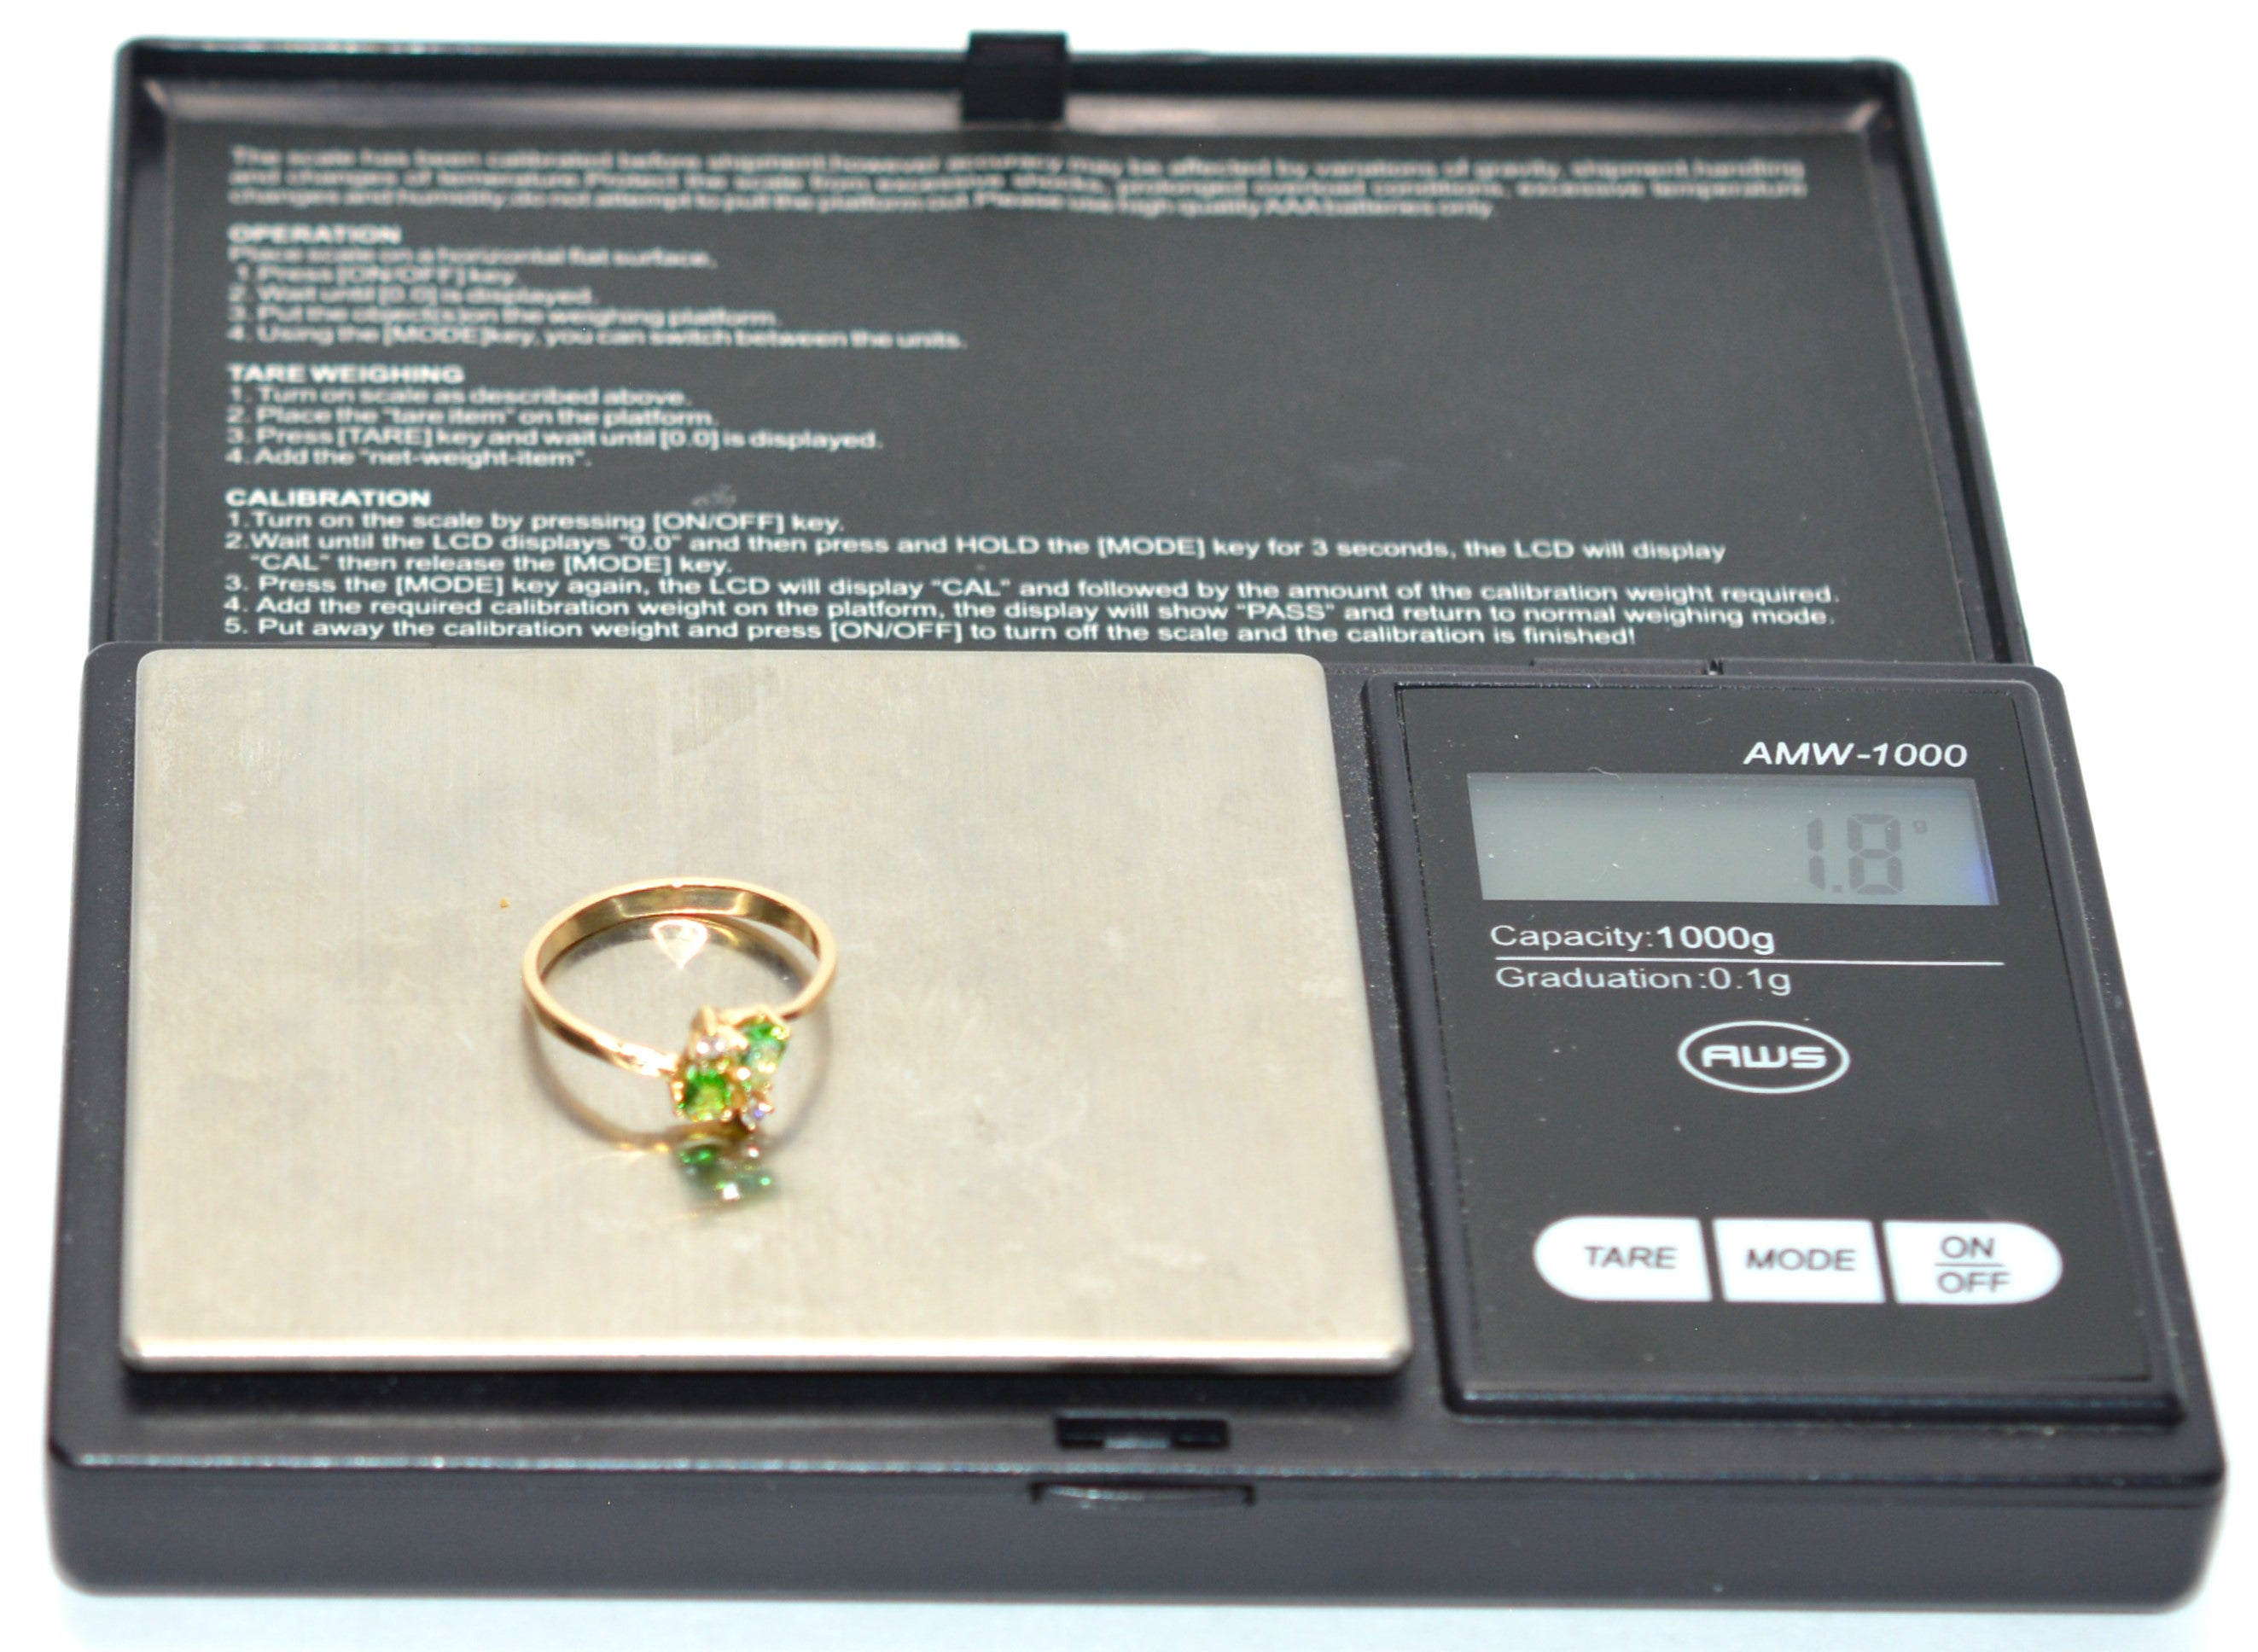 Natural Tsavorite Garnet & Diamond Ring 14K Solid Gold .43tcw Engagement Ring Green Gemstone Ring Pear January Birthstone Ring Garnet Ring